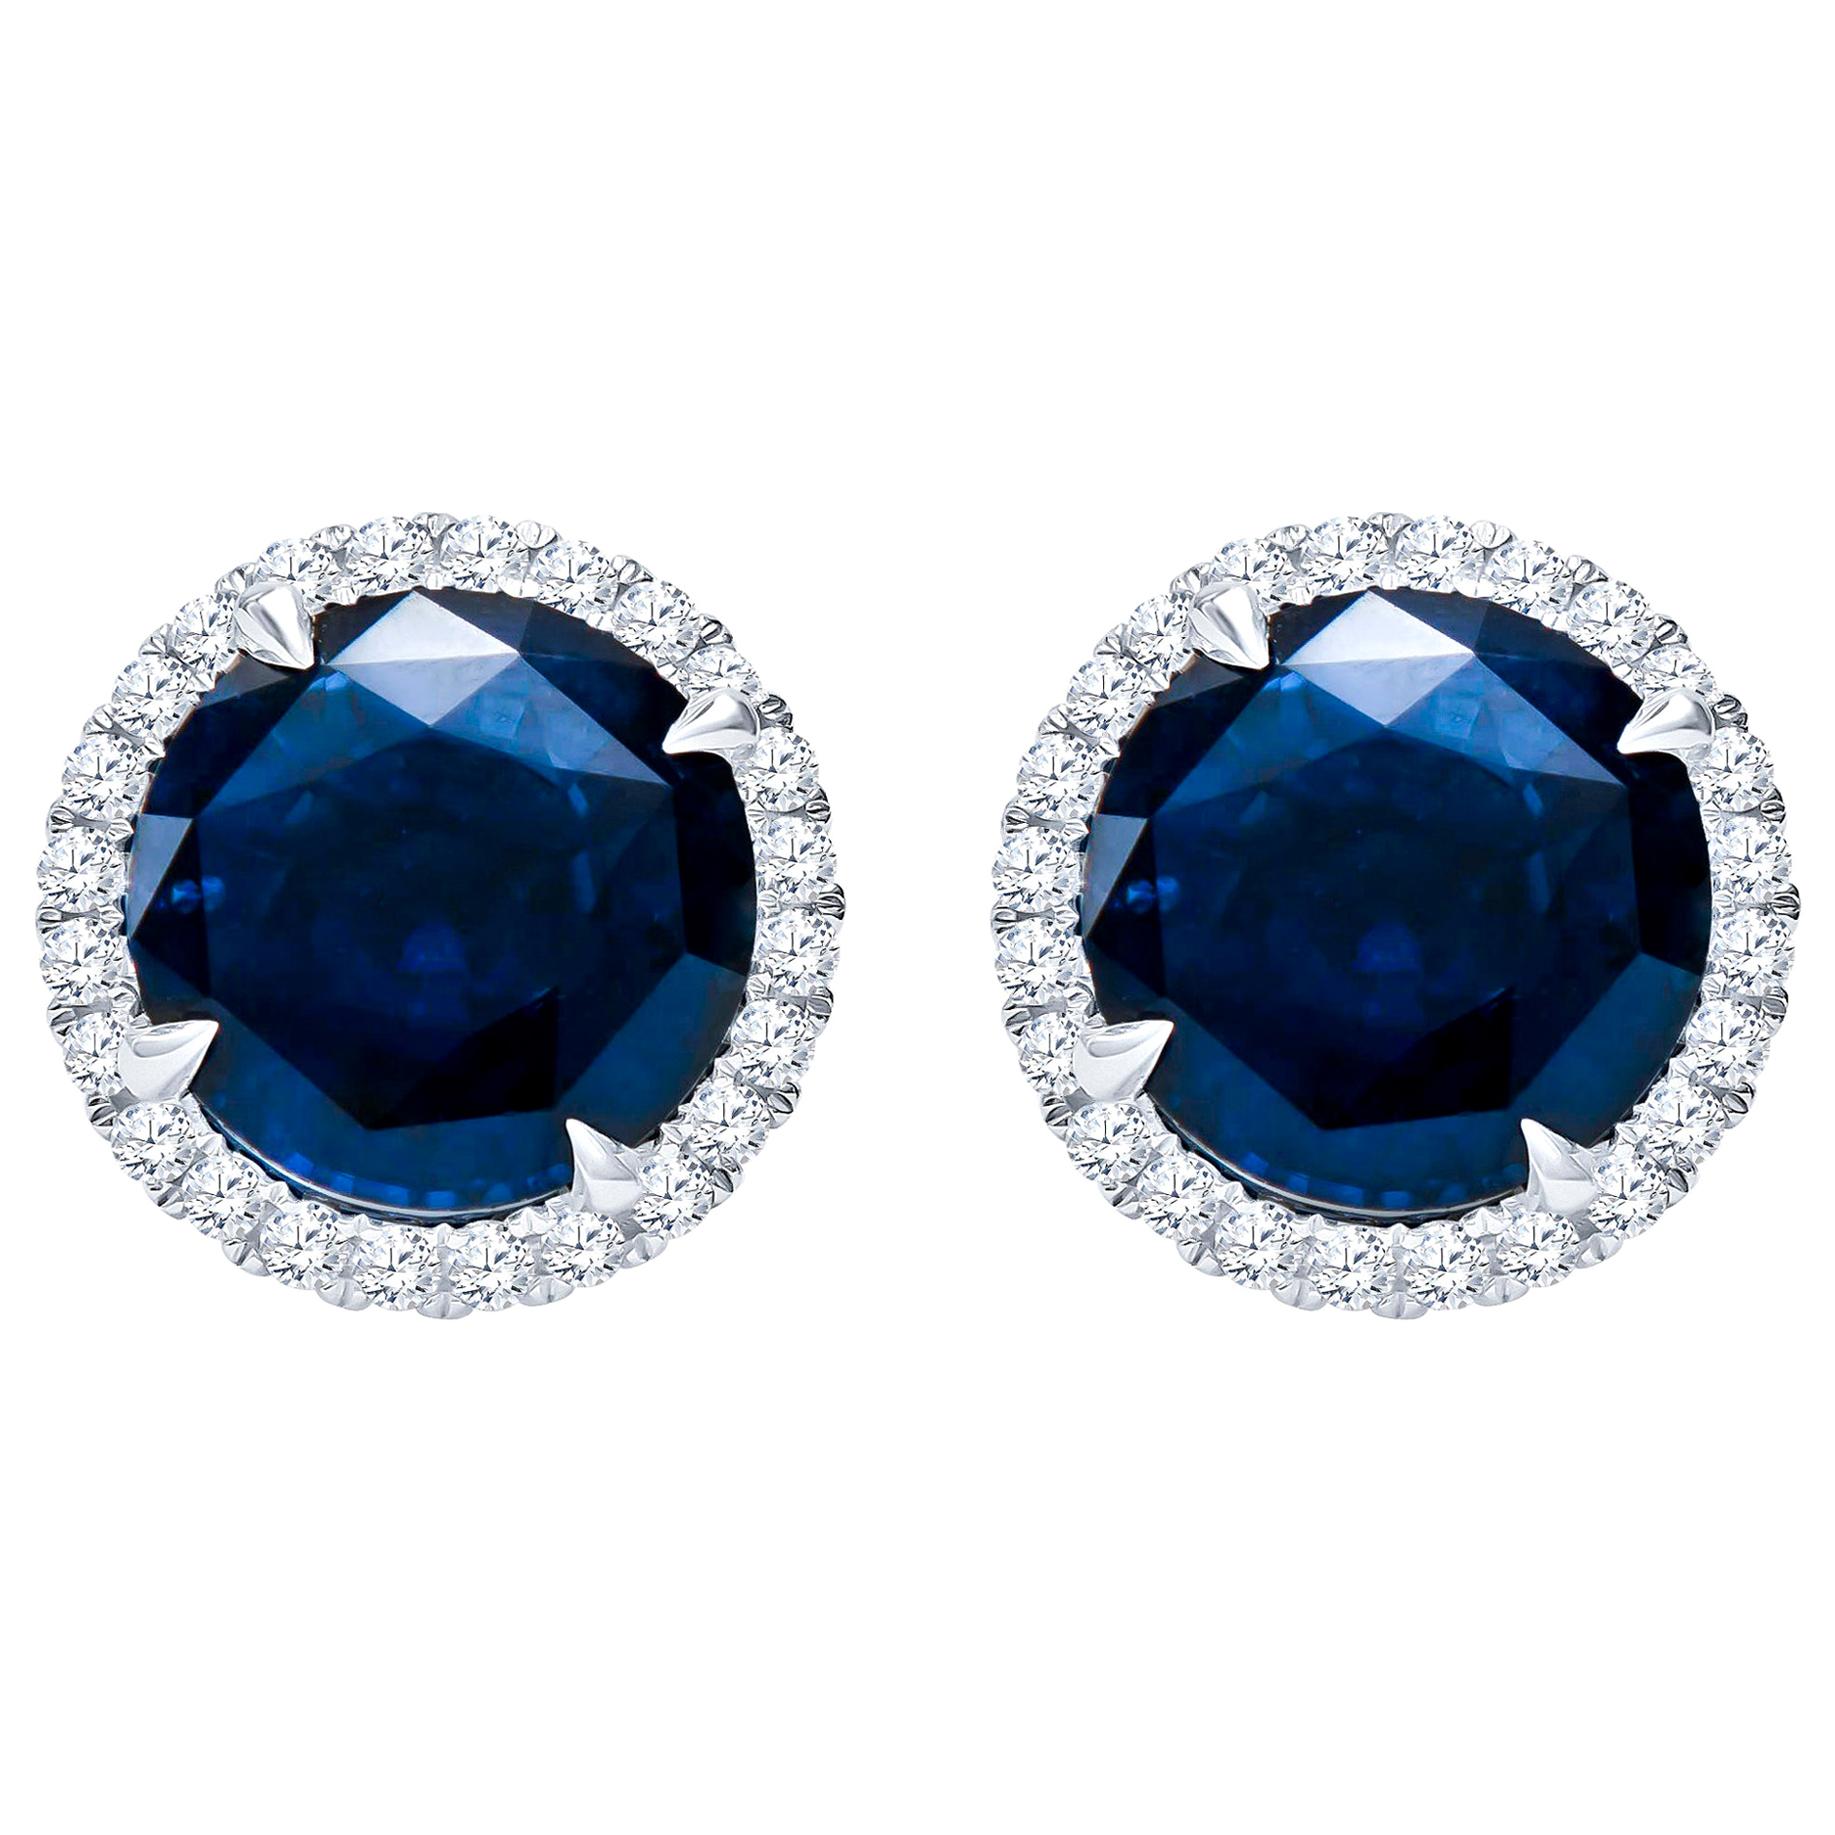 10.01 Carat Total Round Natural Blue Sapphires & Diamond Halo Stud Earrings, 18K